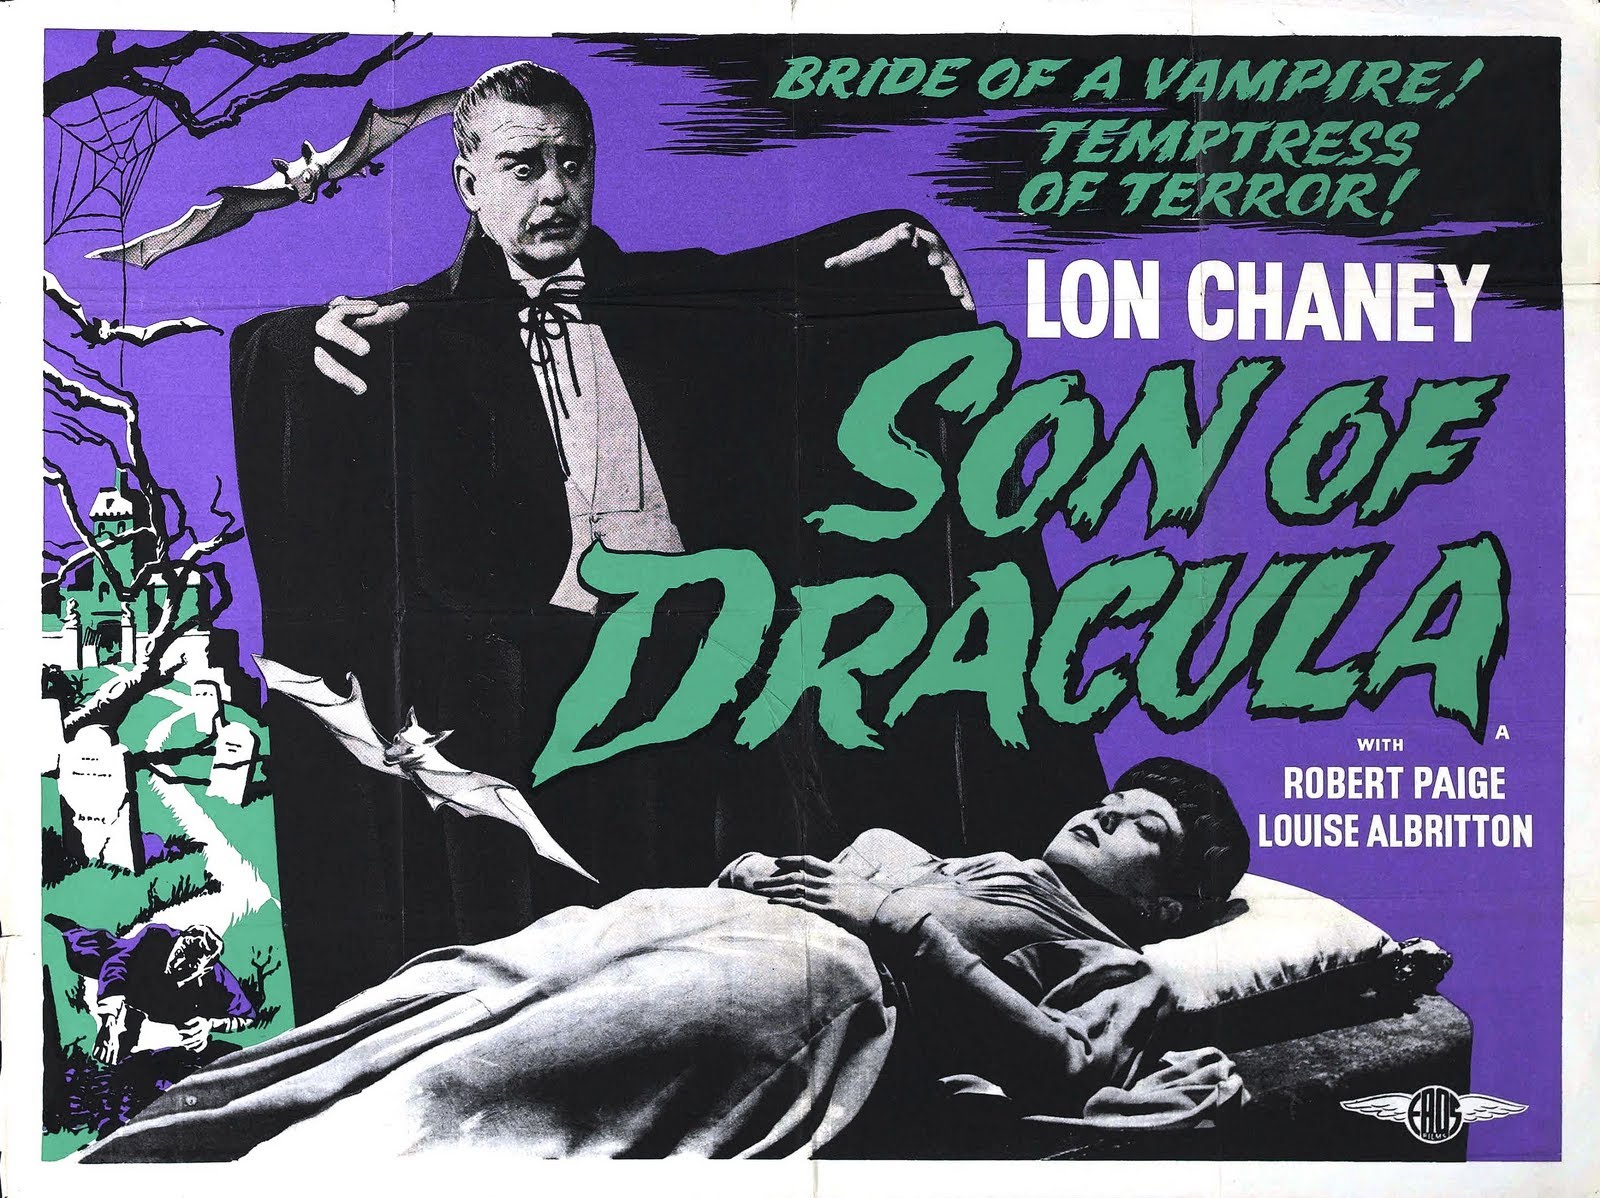 Son Of Dracula HD wallpapers, Desktop wallpaper - most viewed